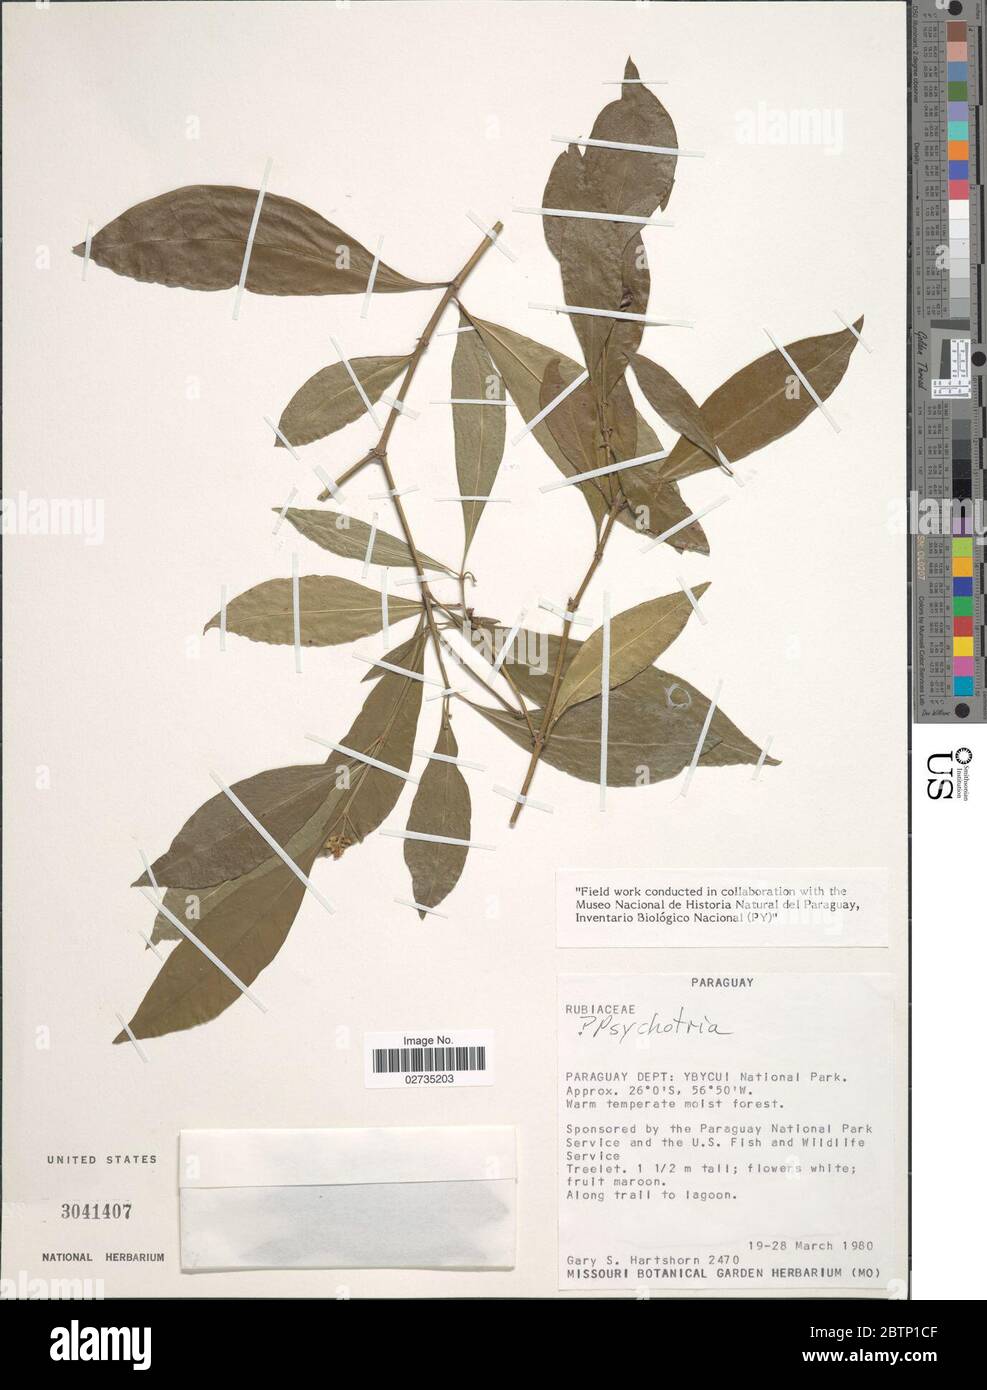 Psychotria sp. Stock Photo